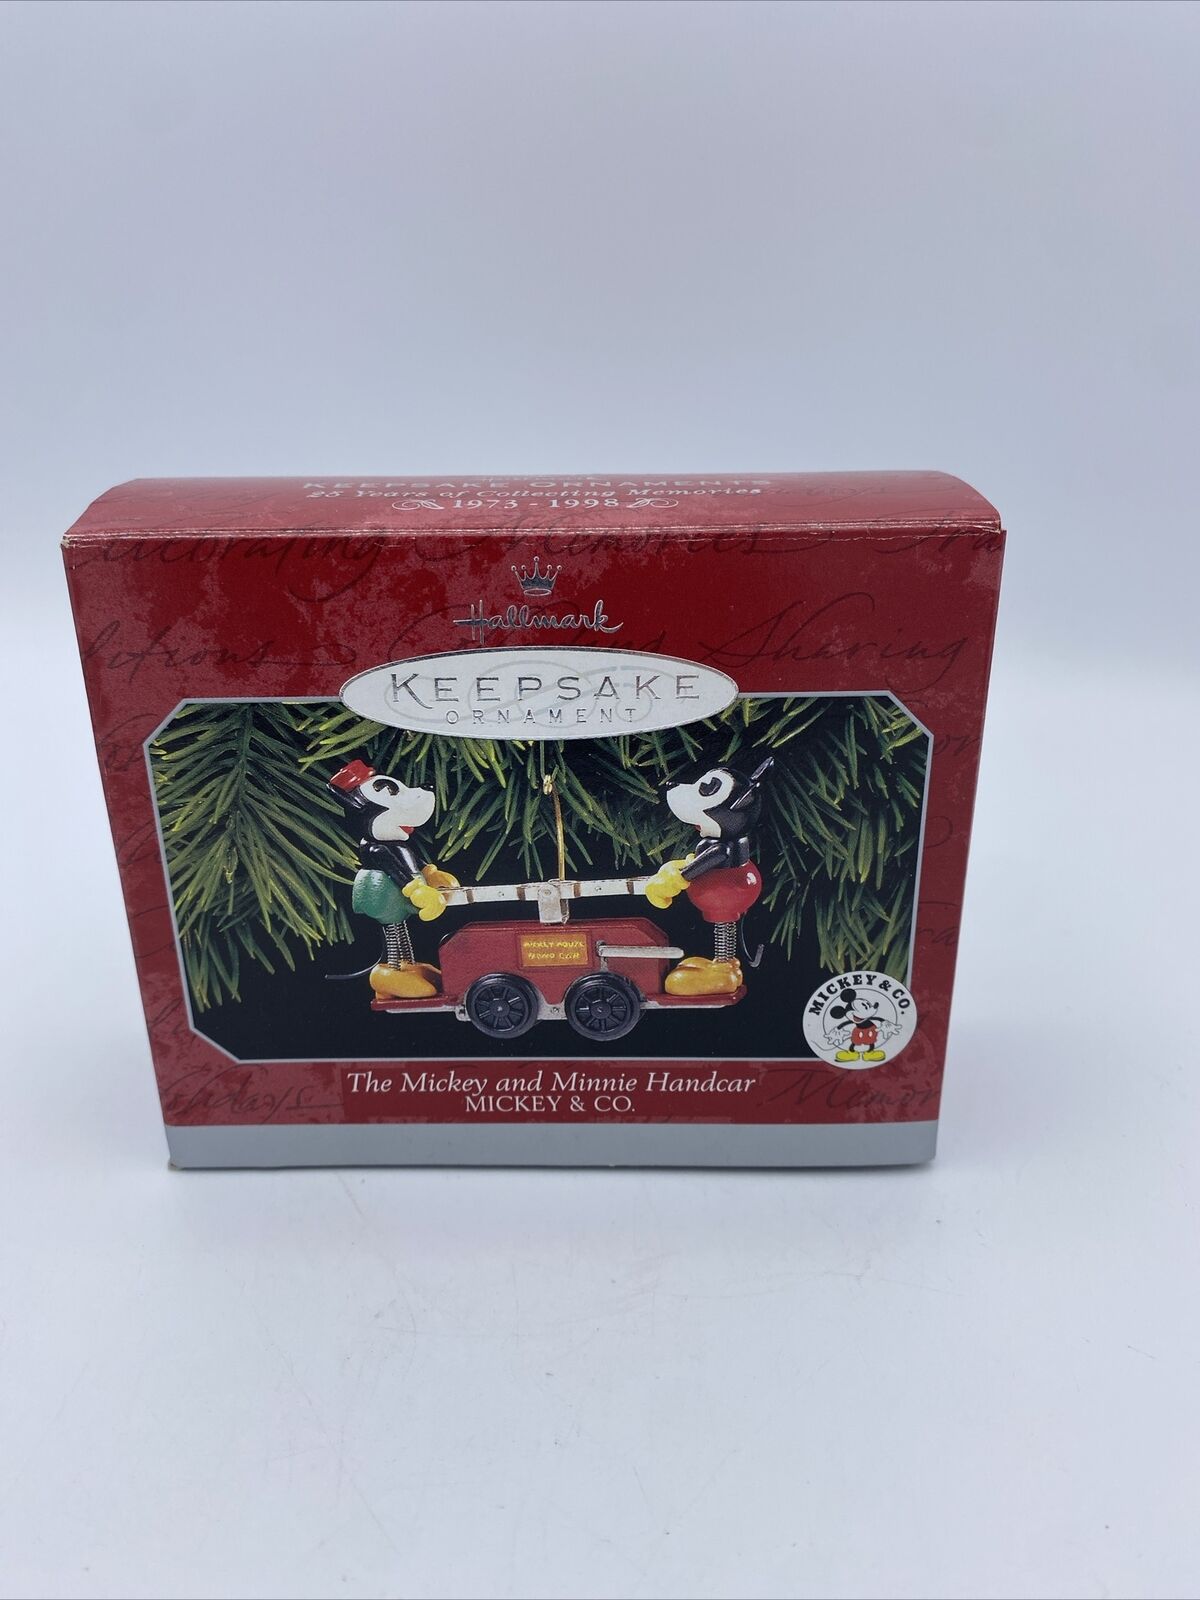 Hallmark Keepsake Ornament - The Mickey and Minnie Handcar (Lionel) - 1998